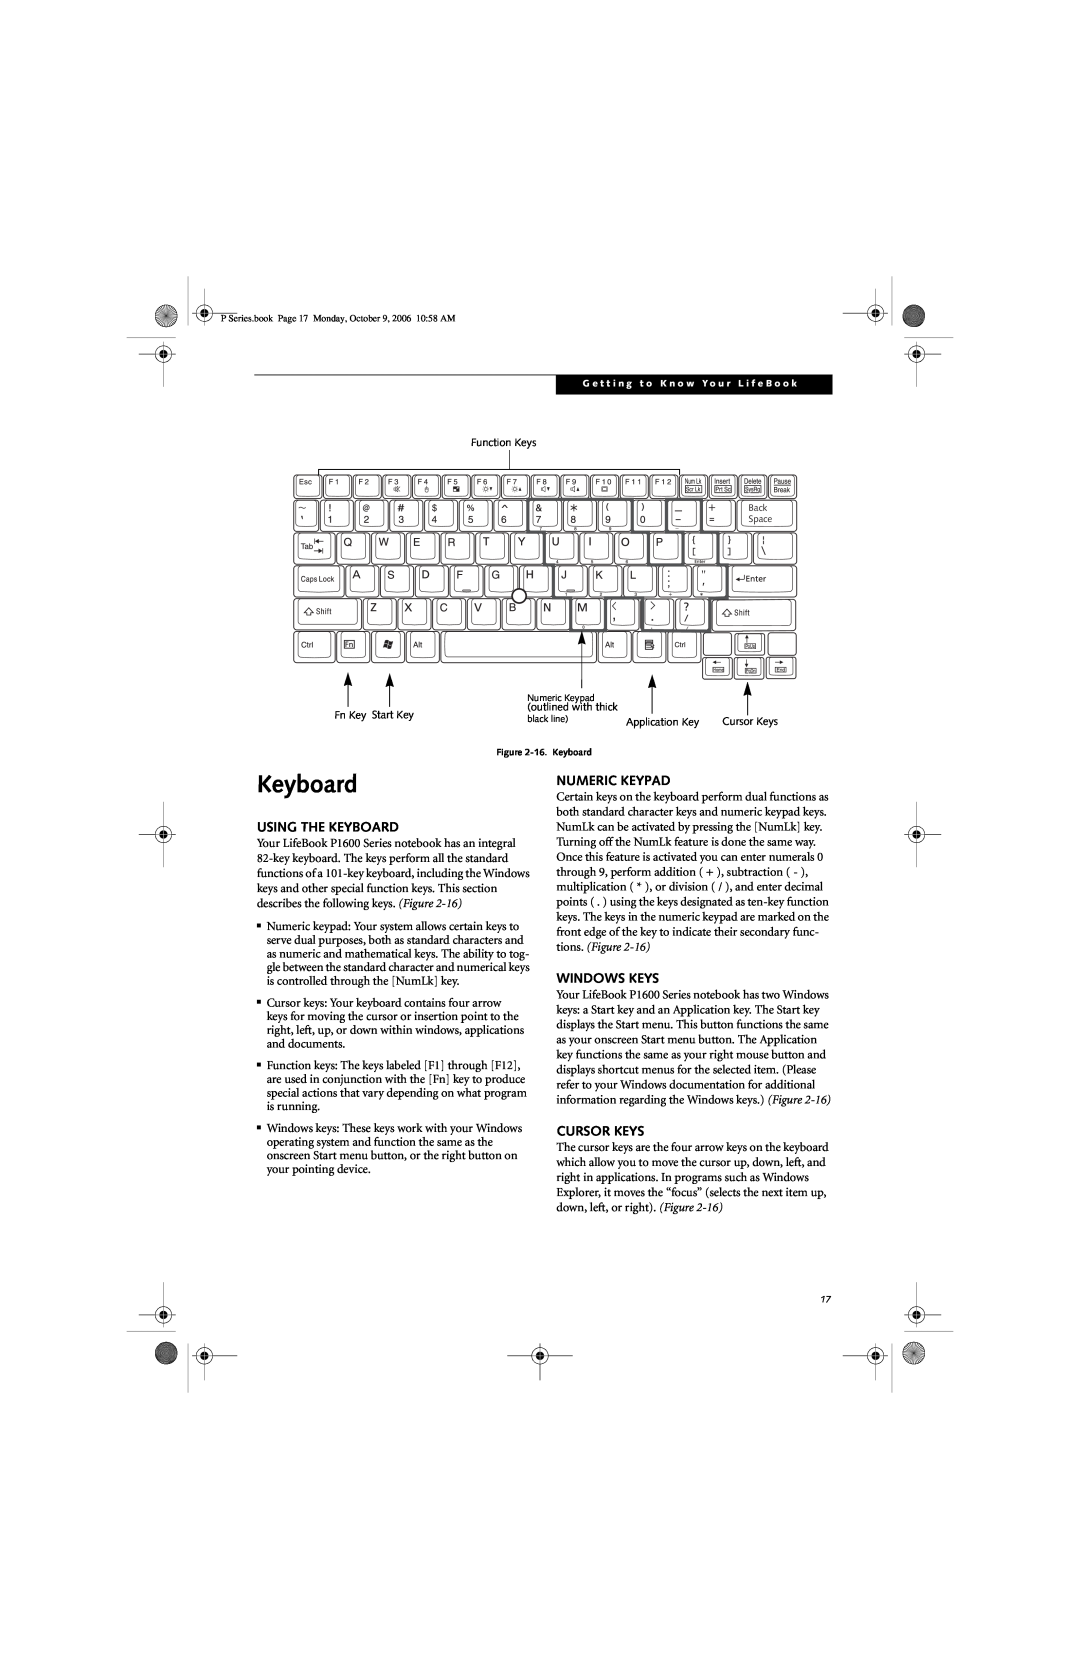 Fujitsu P1610 manual Using The Keyboard, Numeric Keypad, Windows Keys, Cursor Keys 